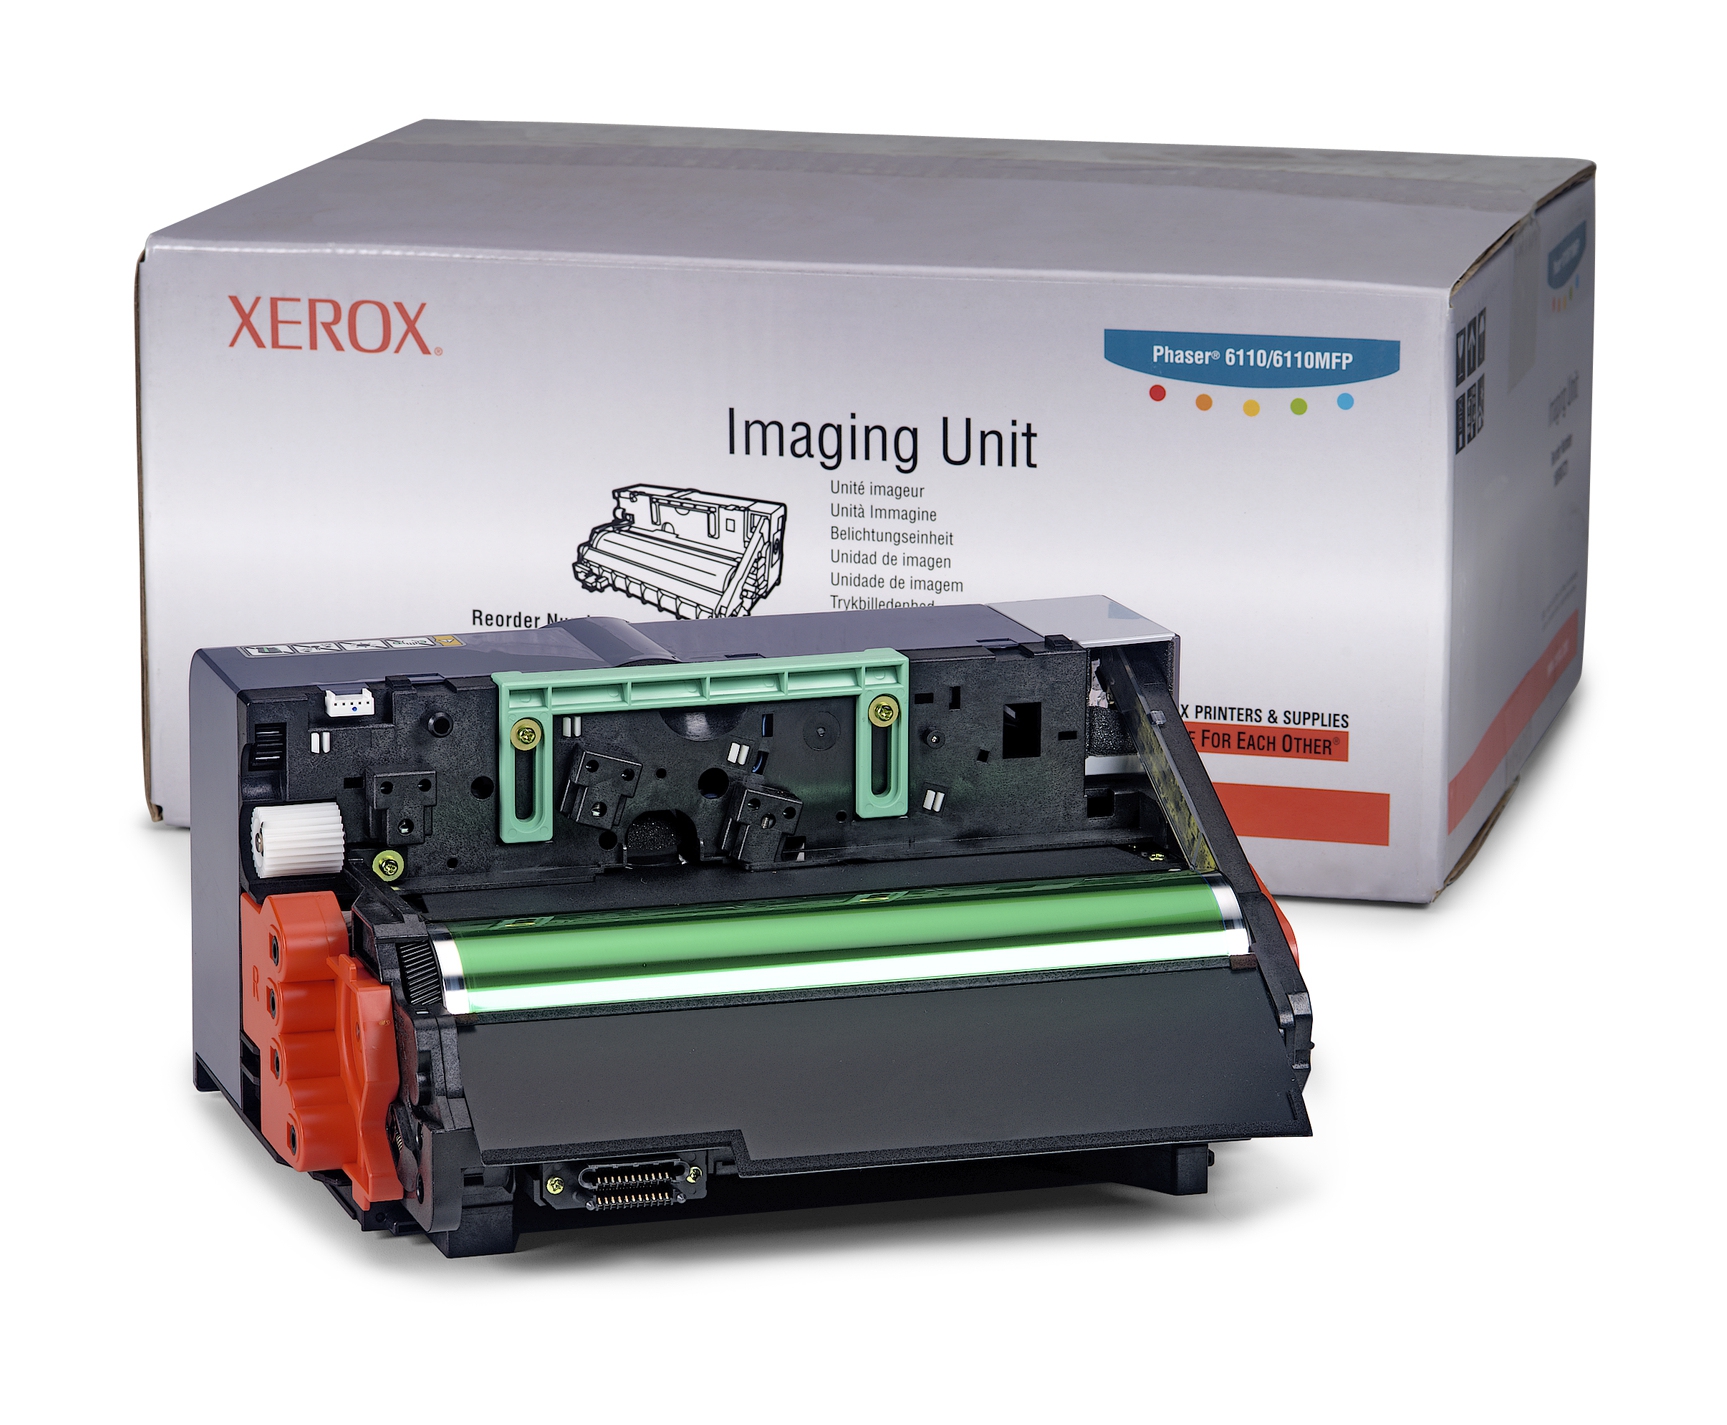 Xerox imaging unit, phaser 6110/6110mfp